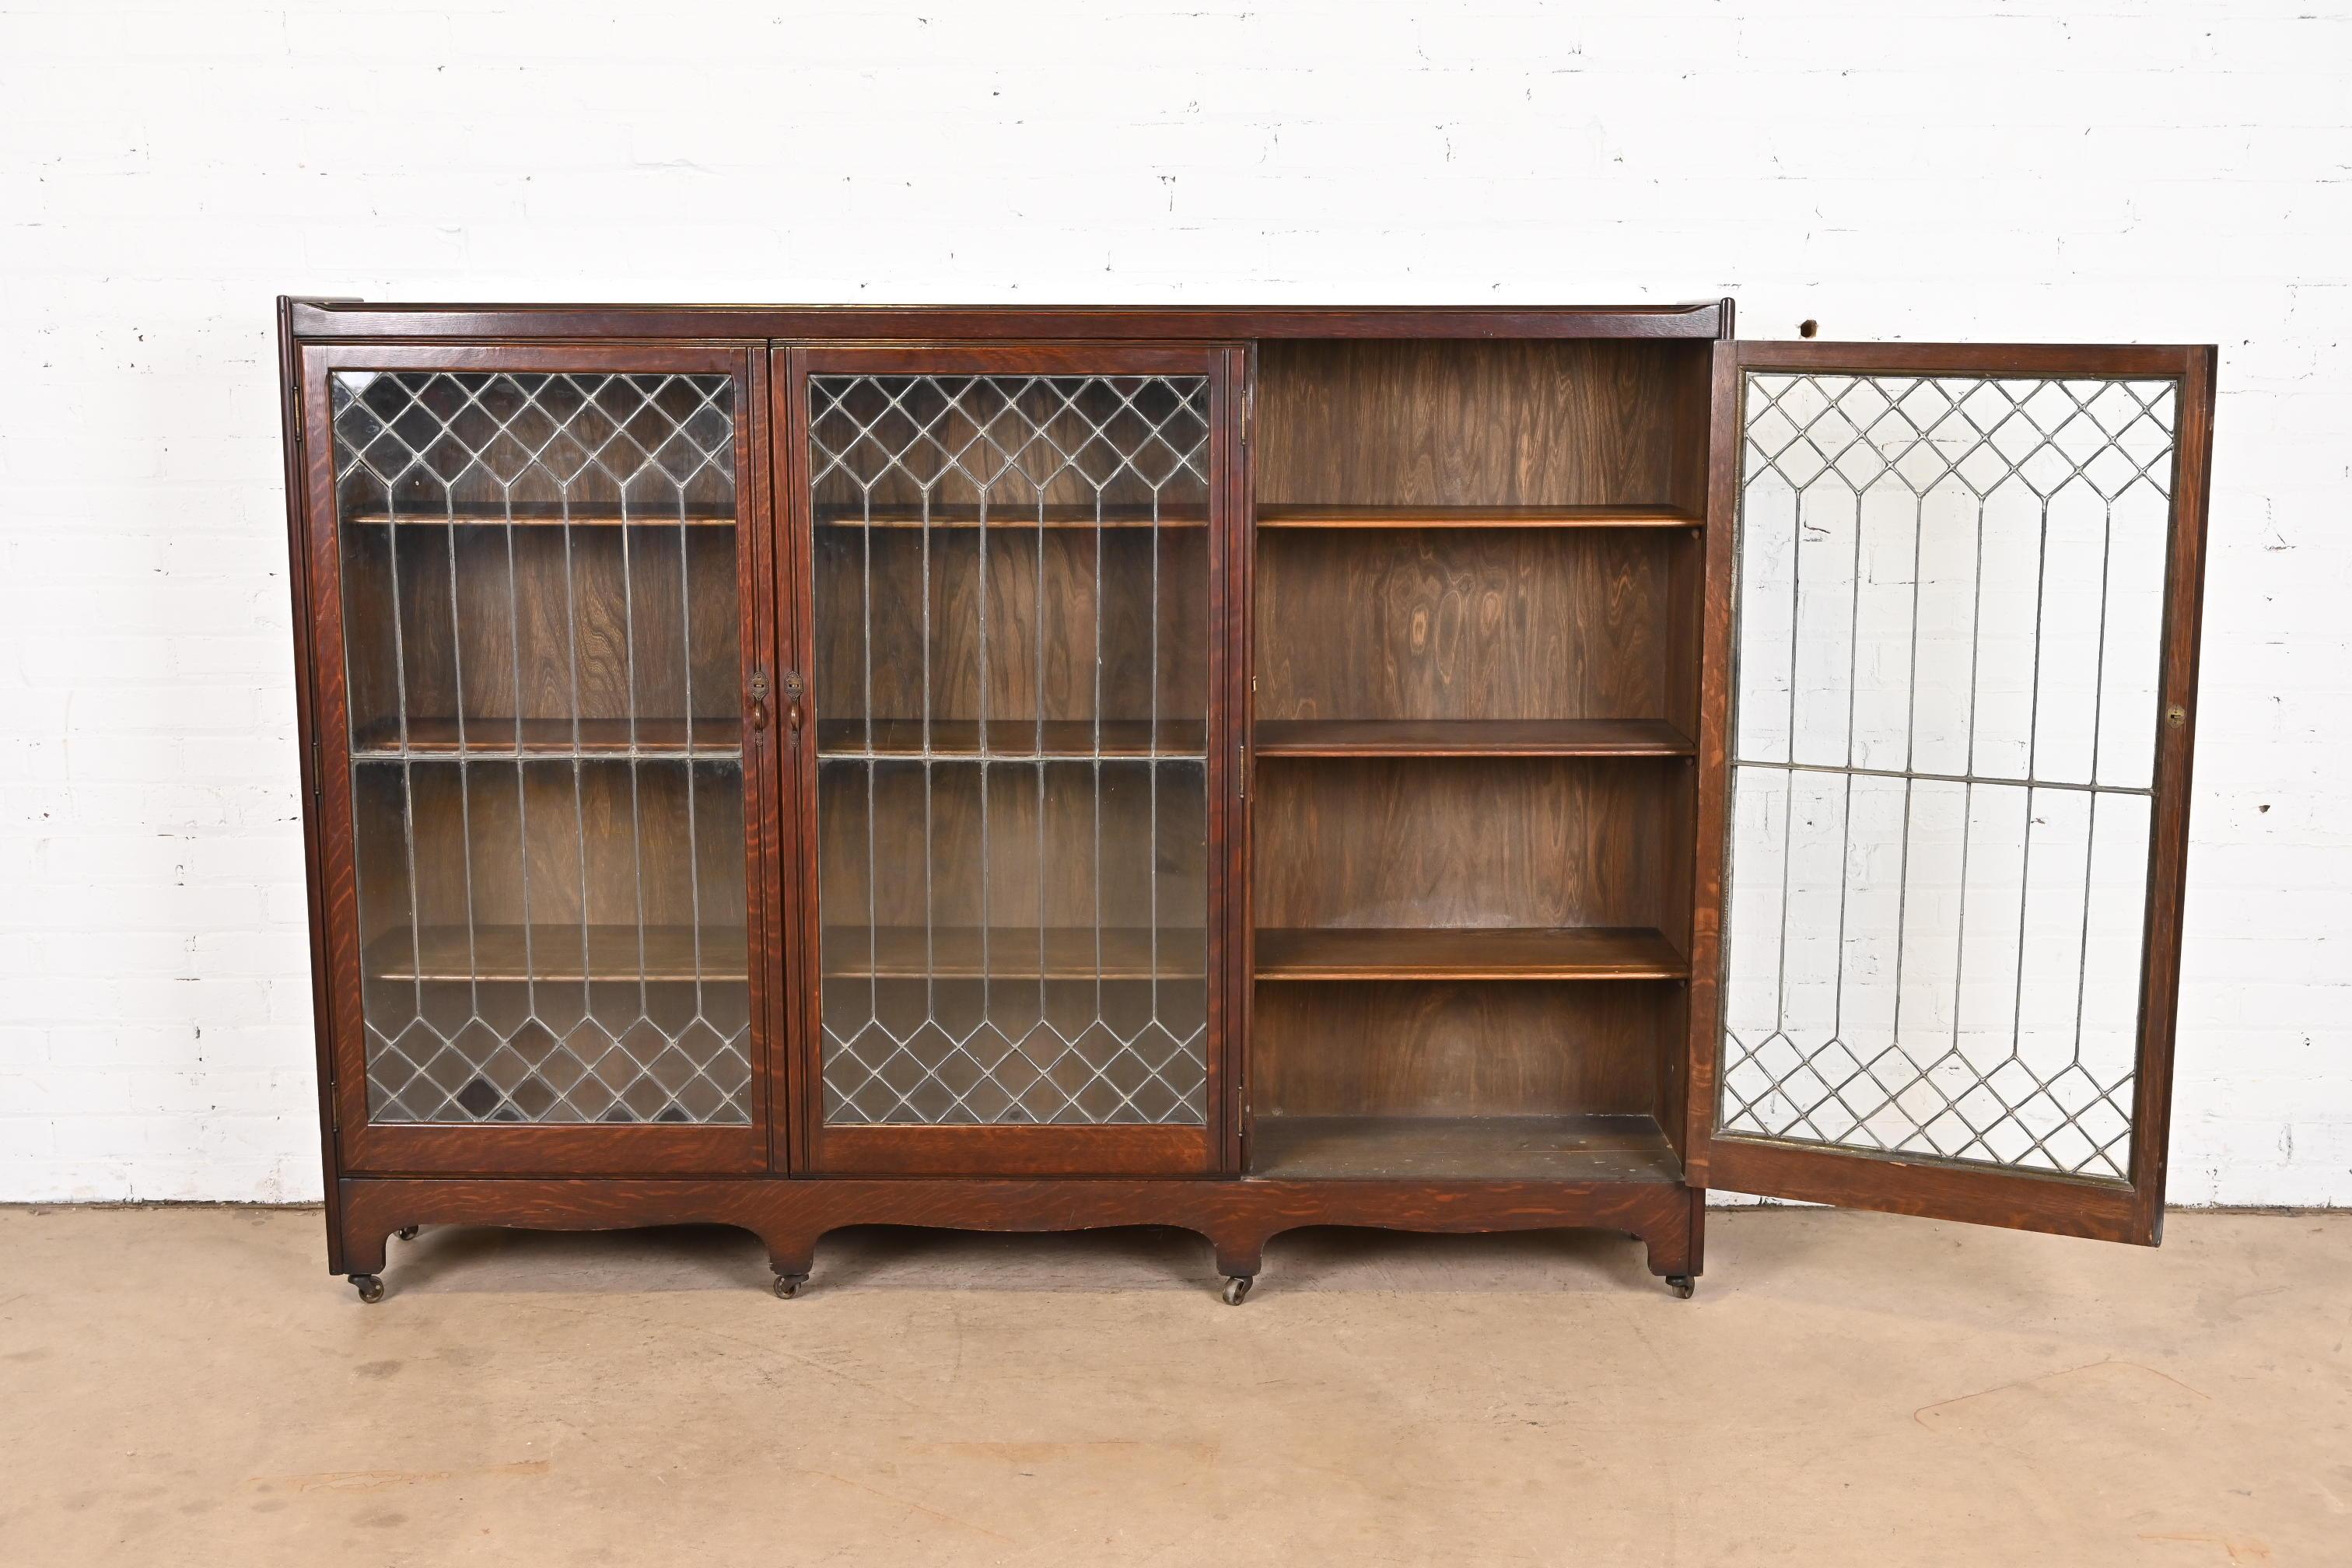 American Antique Arts & Crafts Oak Leaded Glass Triple Bookcase by George C. Flint Co.